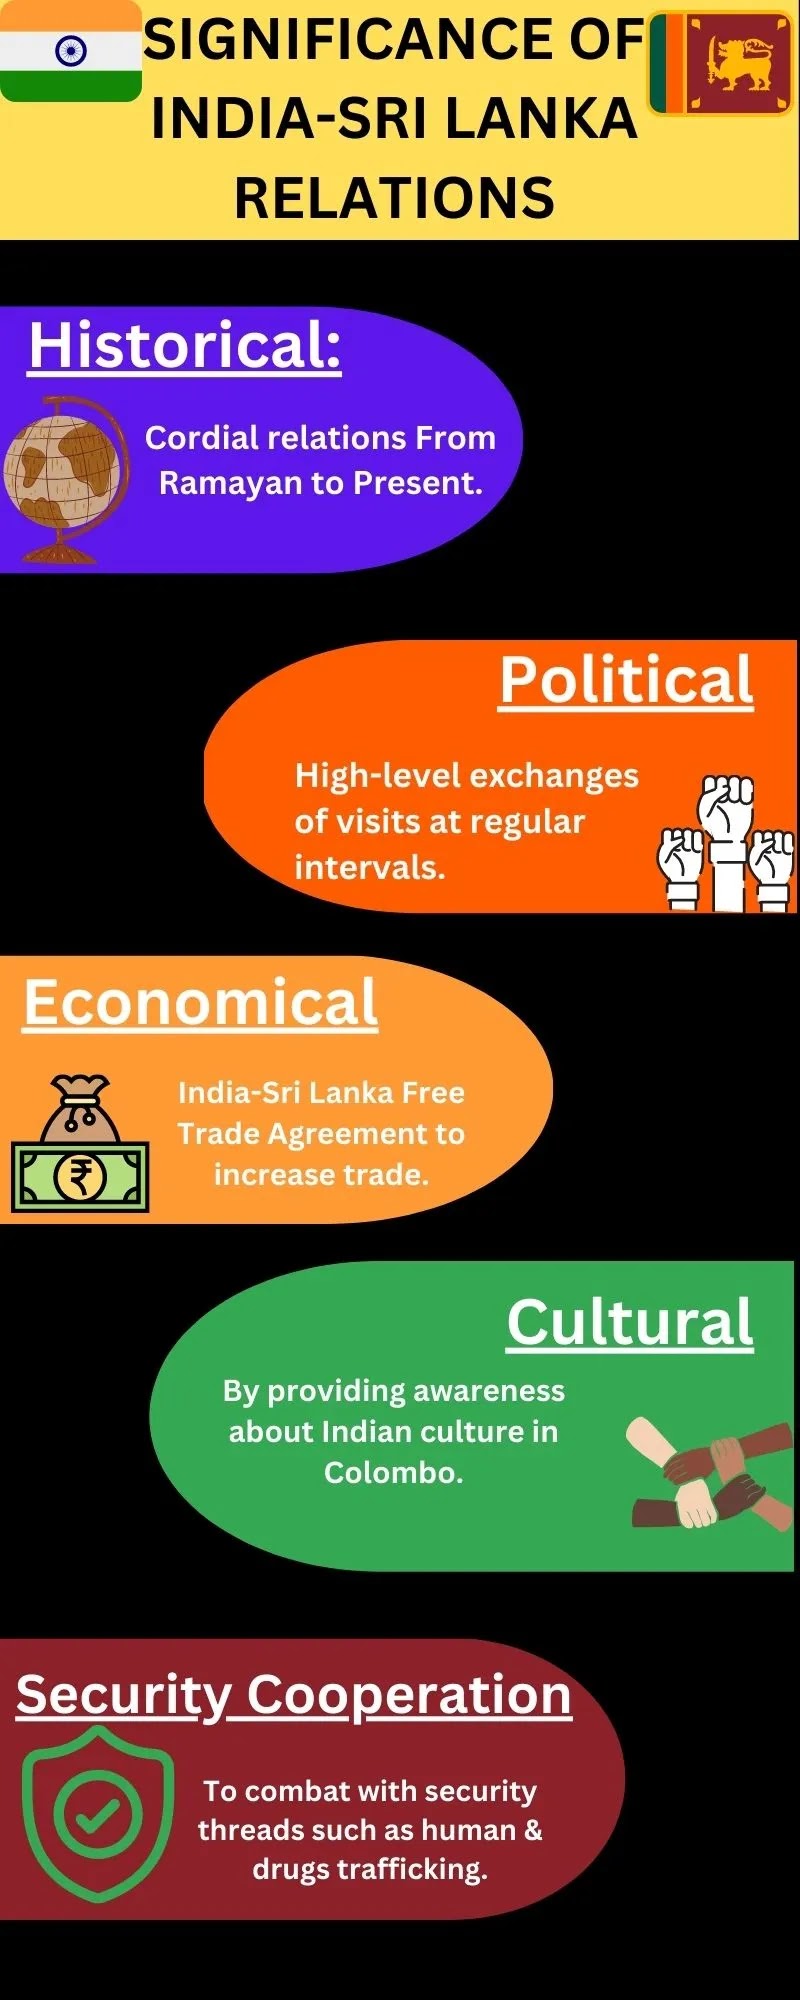 Significance of India-Sri Lanka Relations